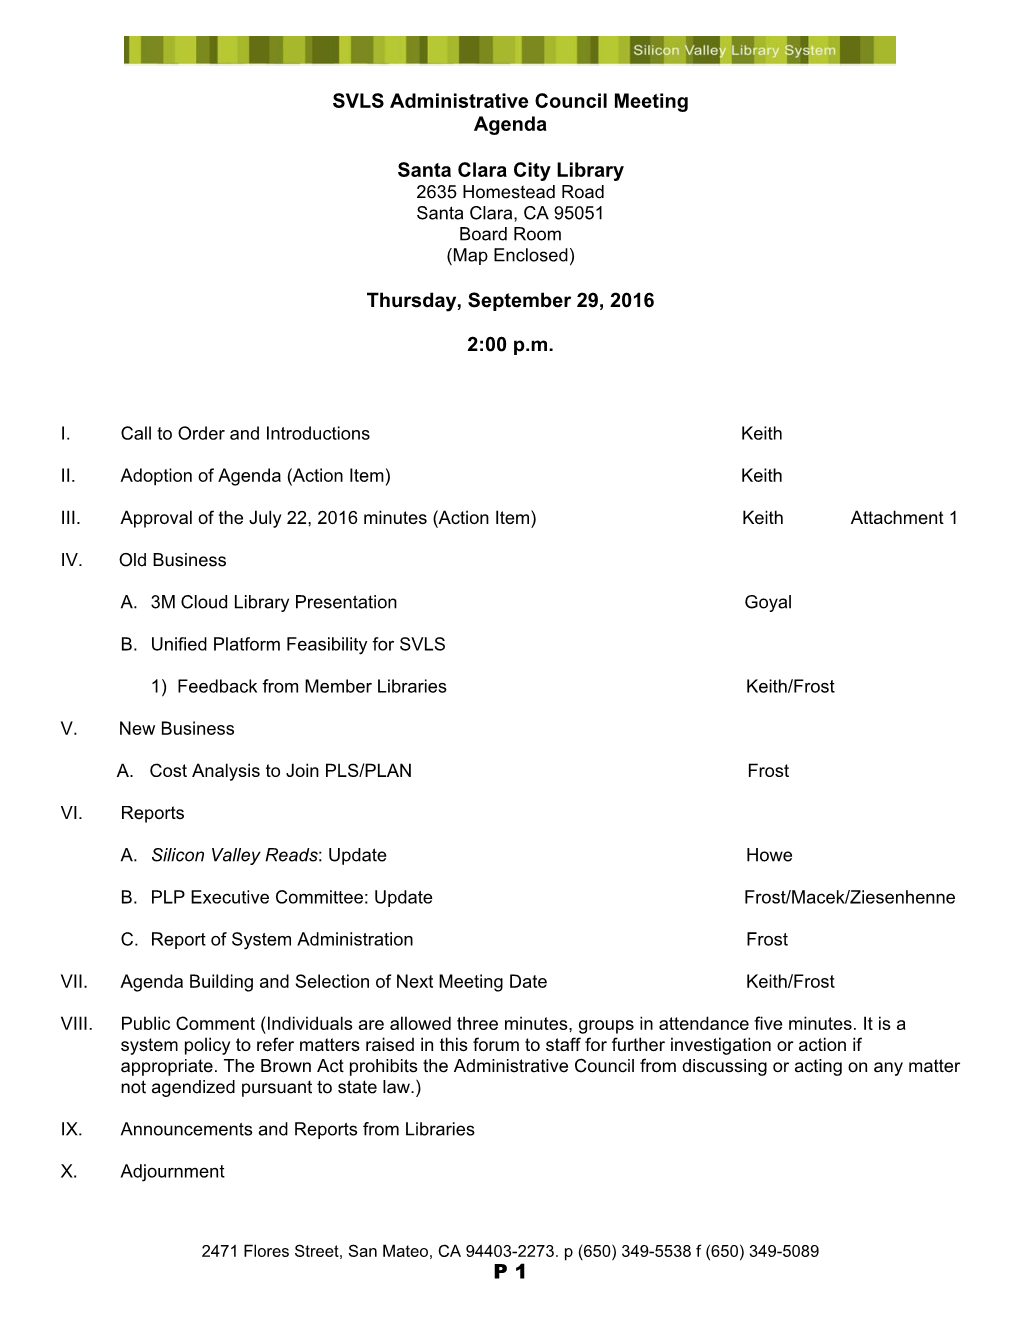 SVLS Administrative Council Meeting Agenda Santa Clara City Library